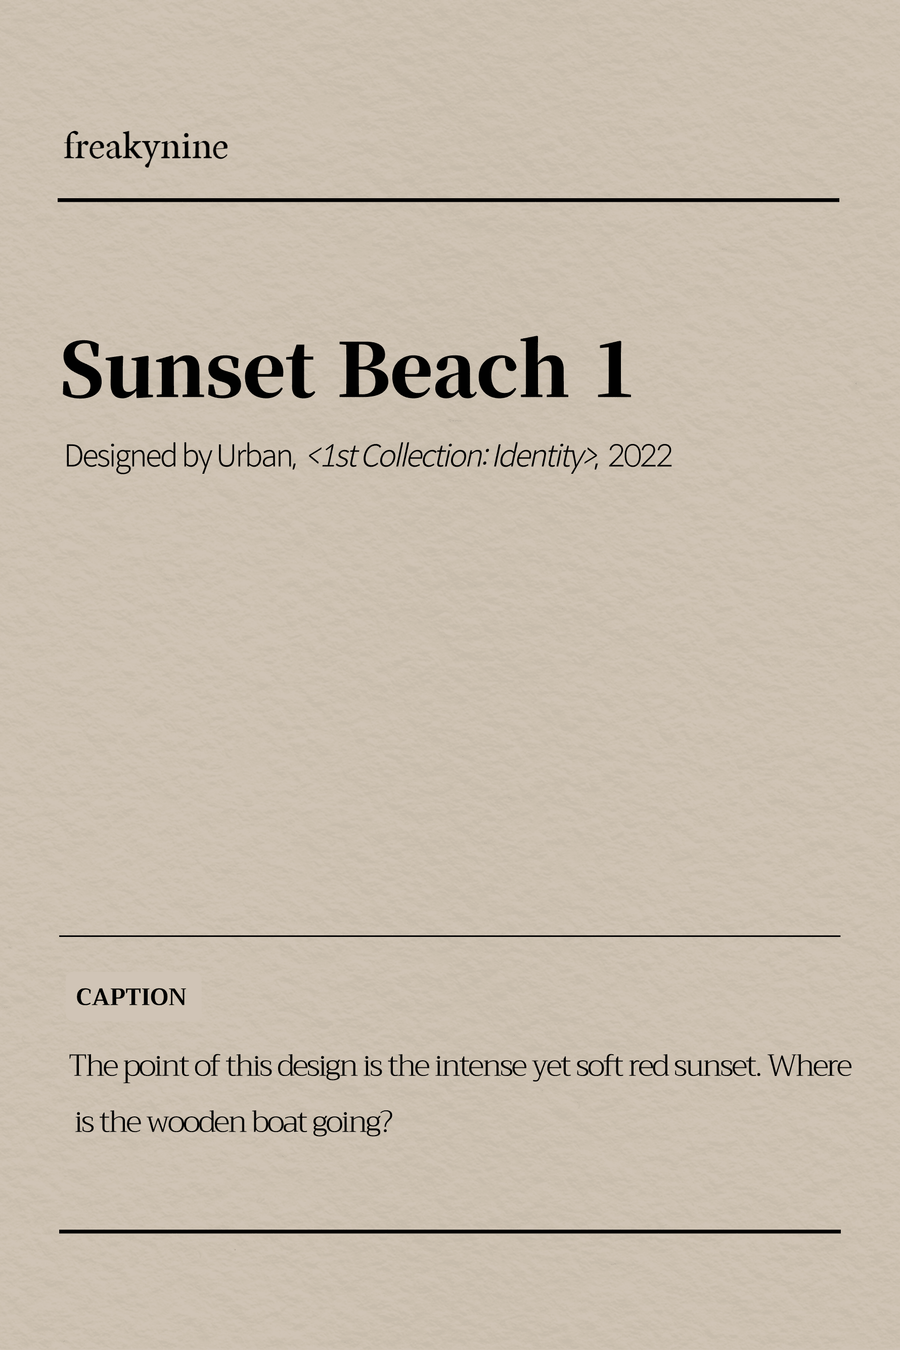 (Urban) Sunset Beach 1 (2EA) - freakynine